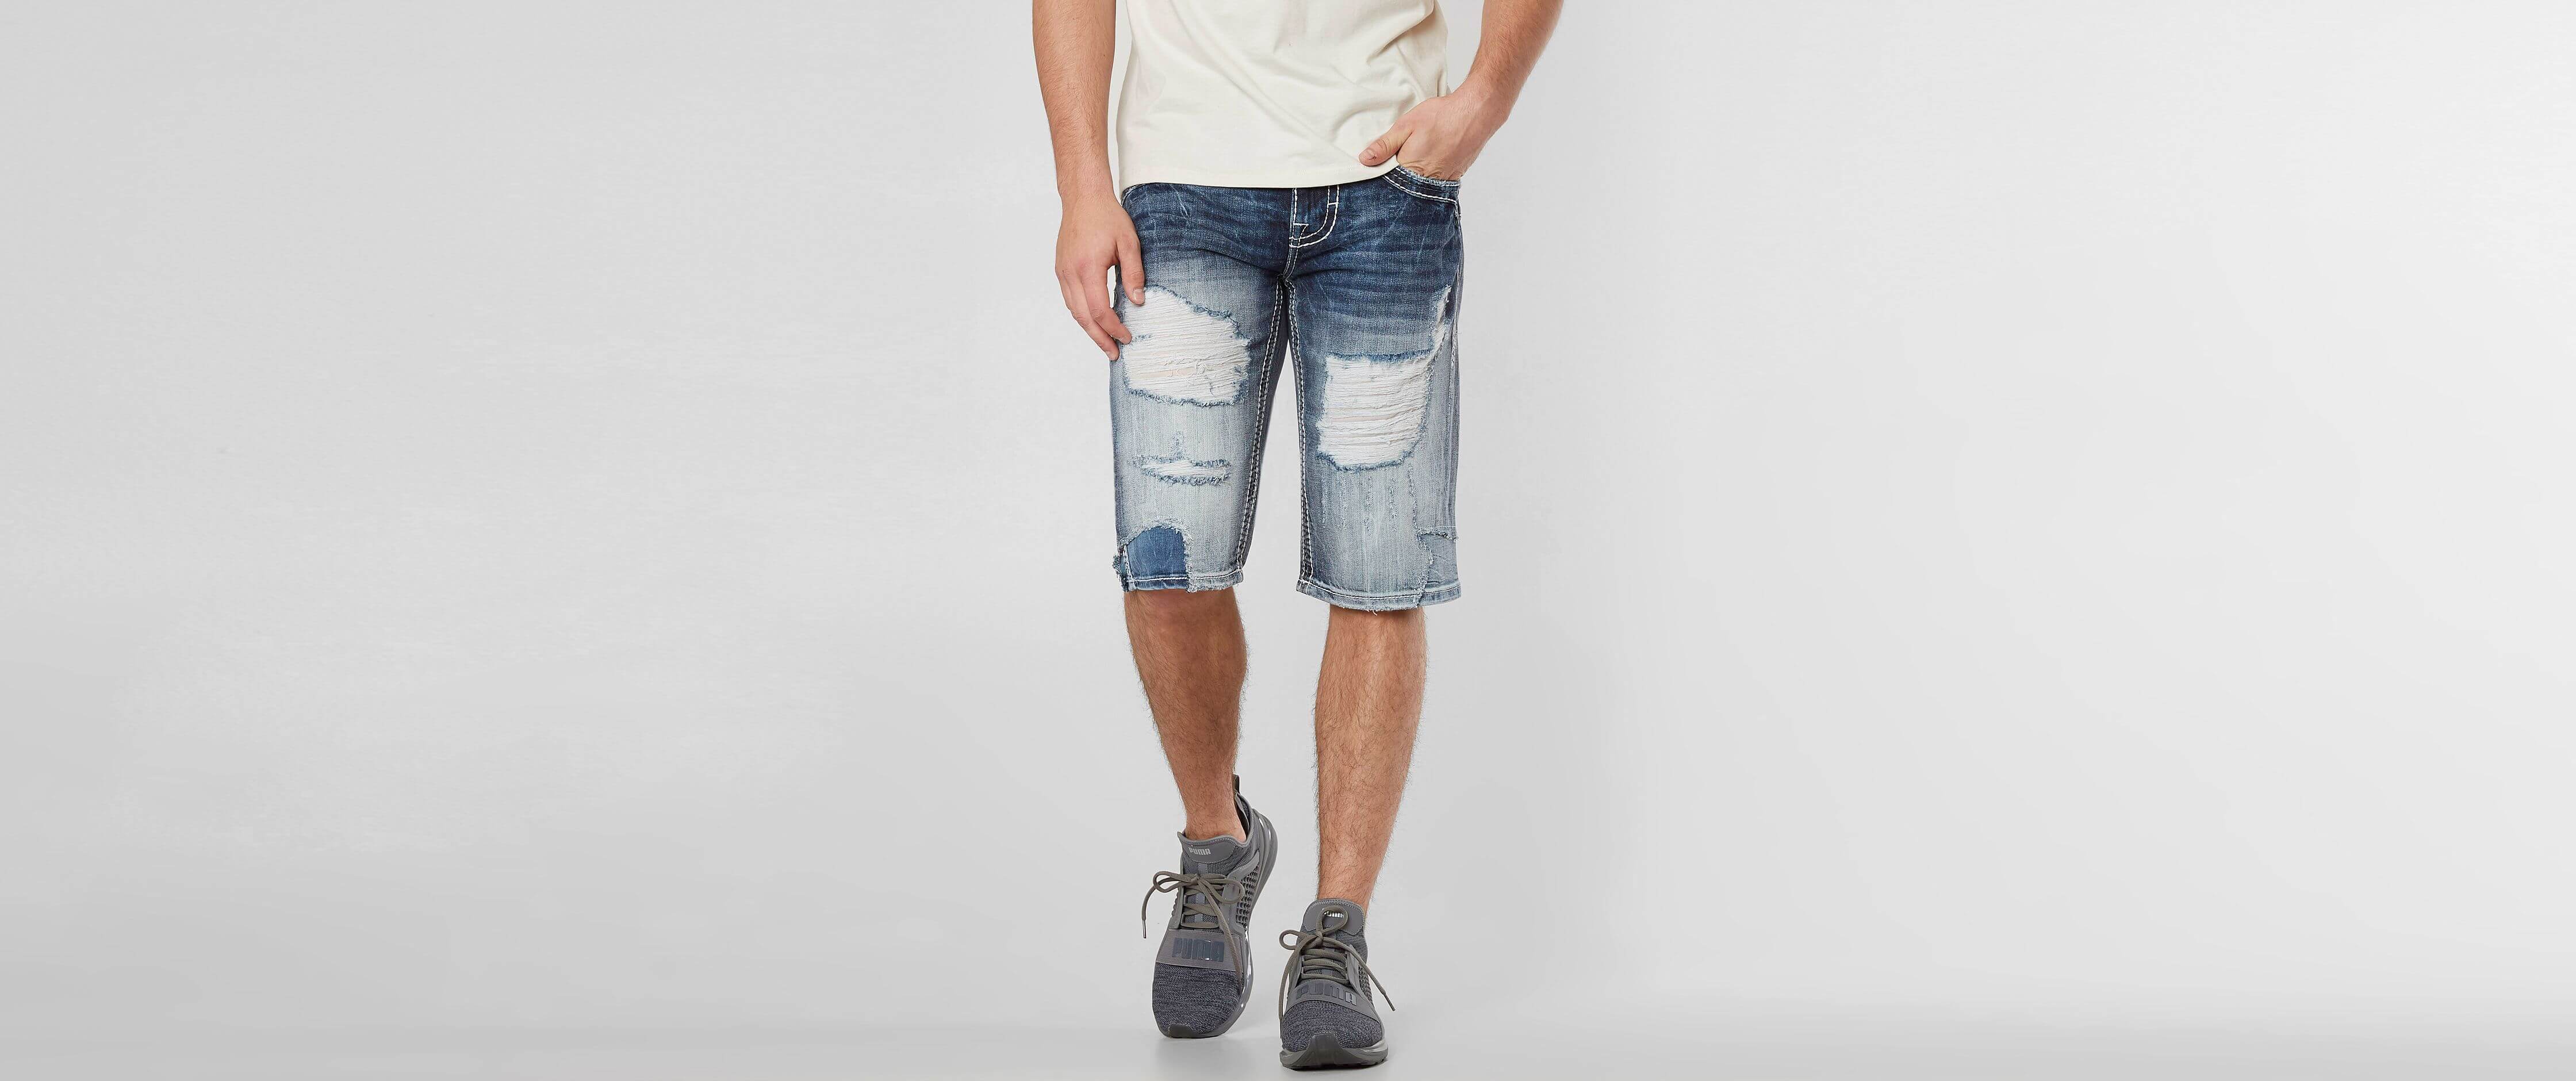 rock revival jean shorts mens